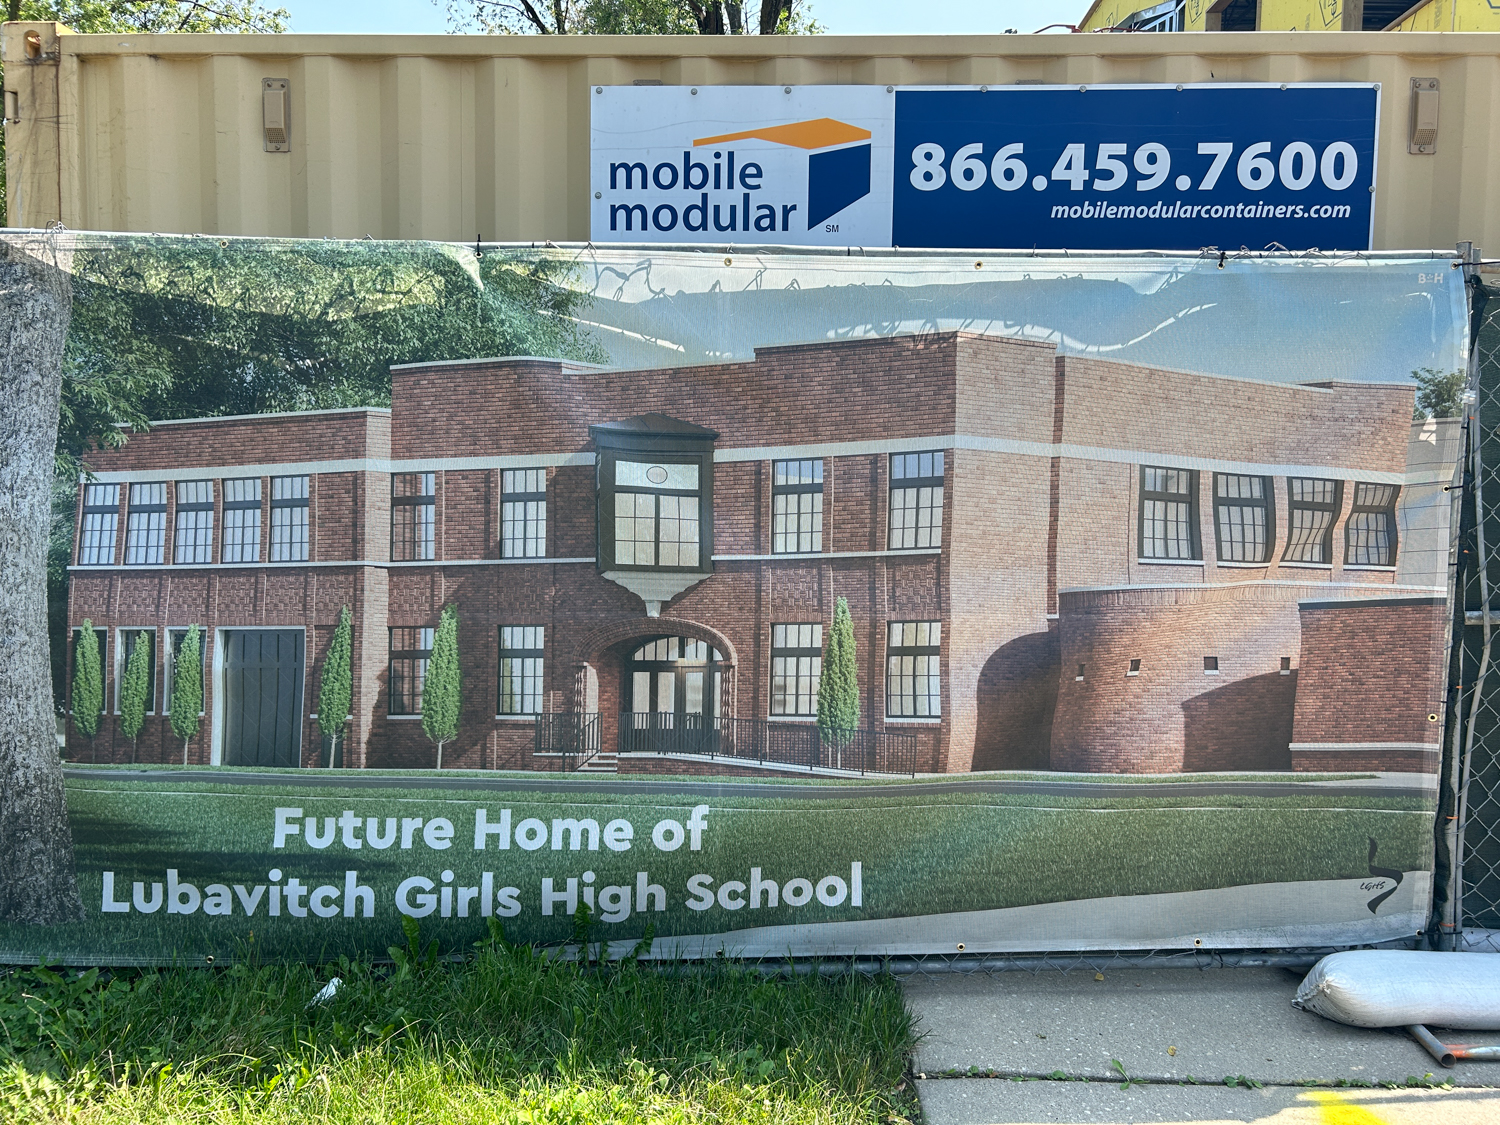 Lubavitch Girls High School construction